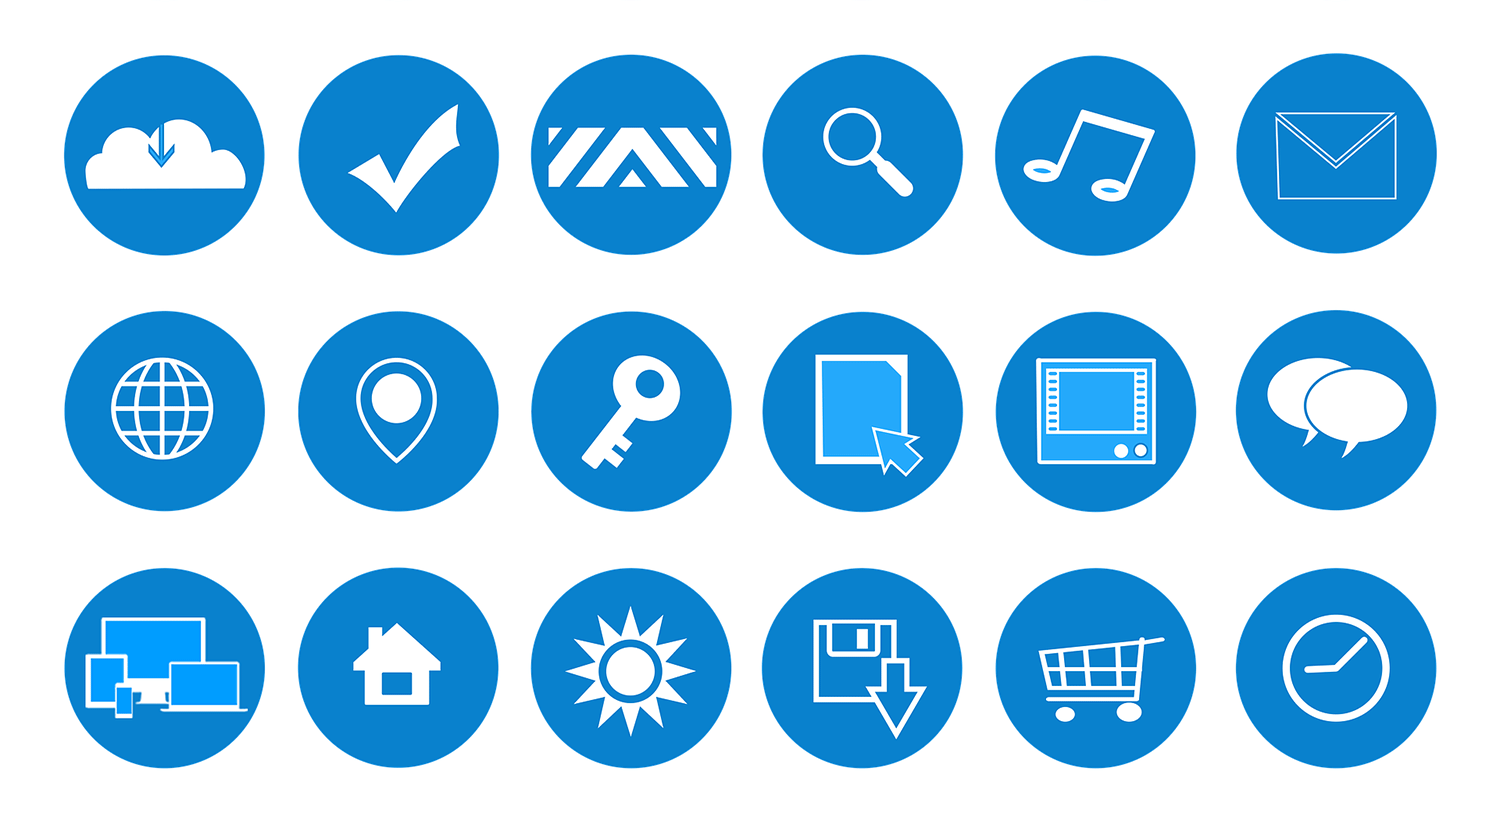 Set of blue icon illustrations